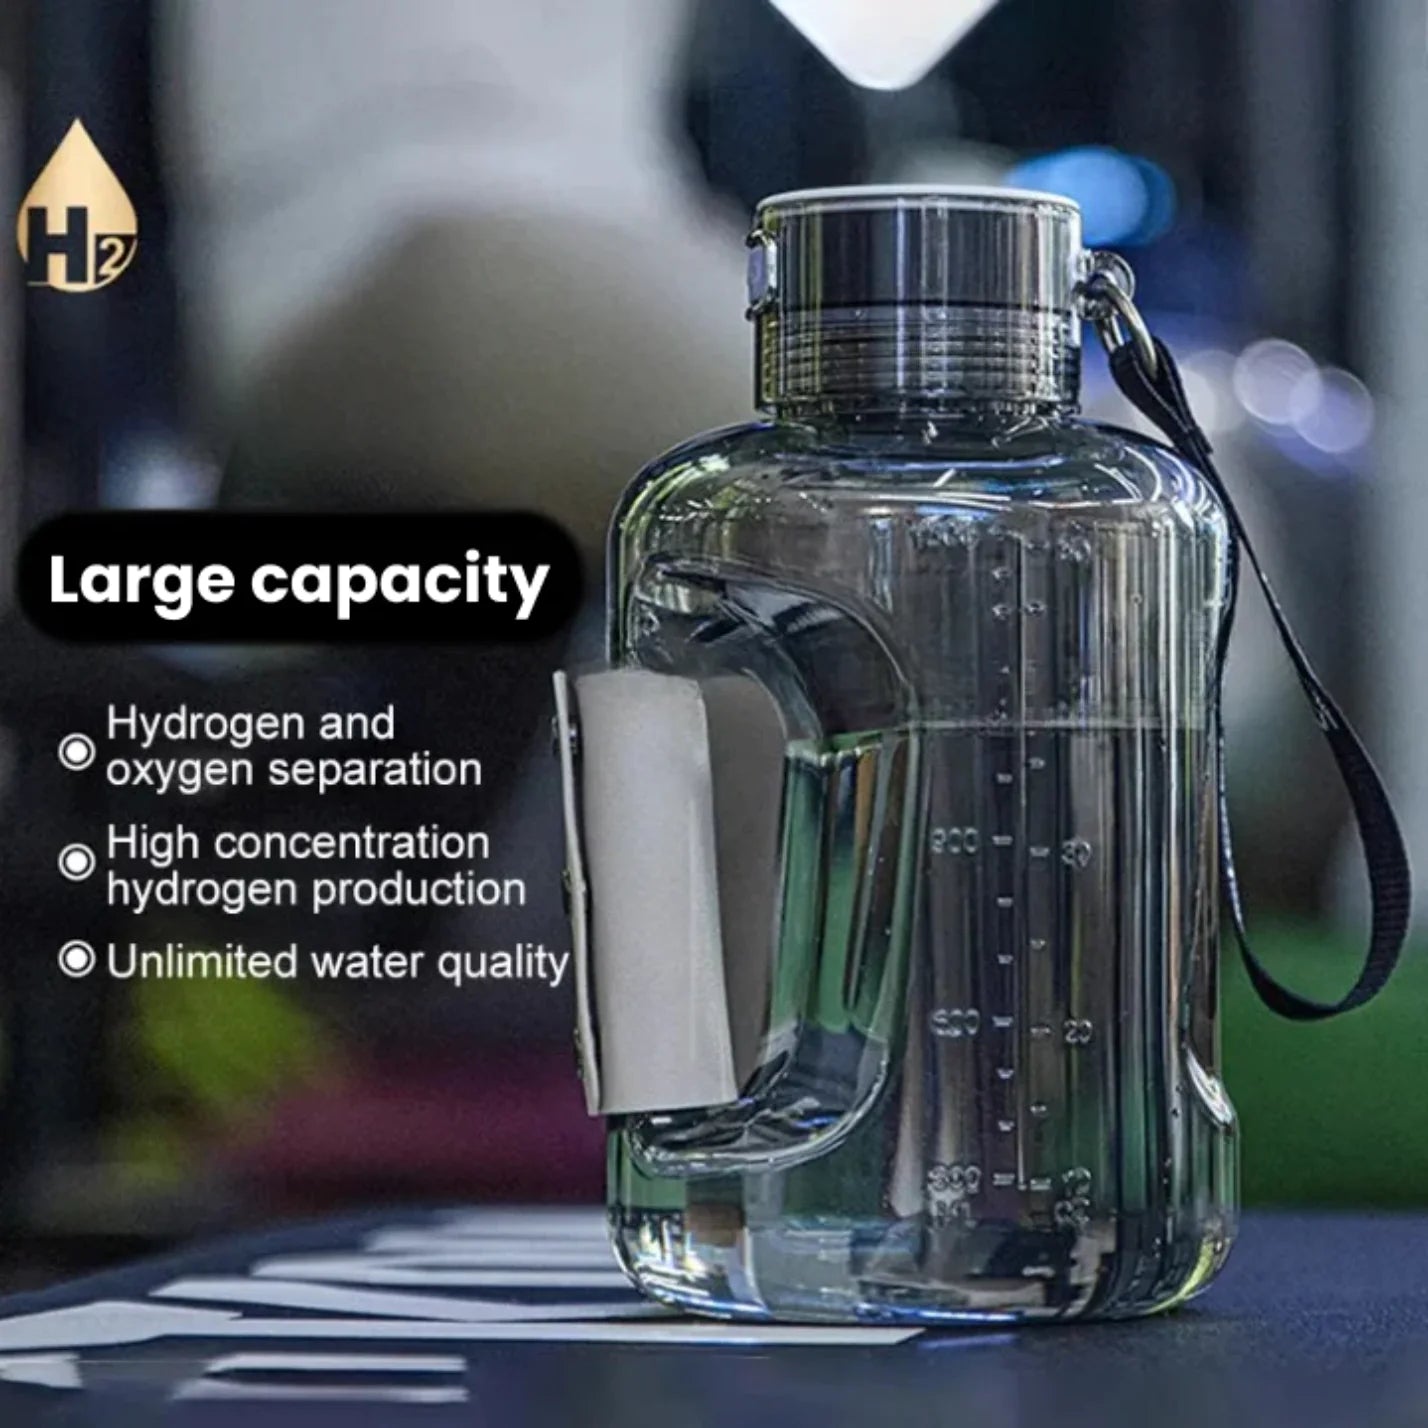 The Hydrogen Generator Water Jug!